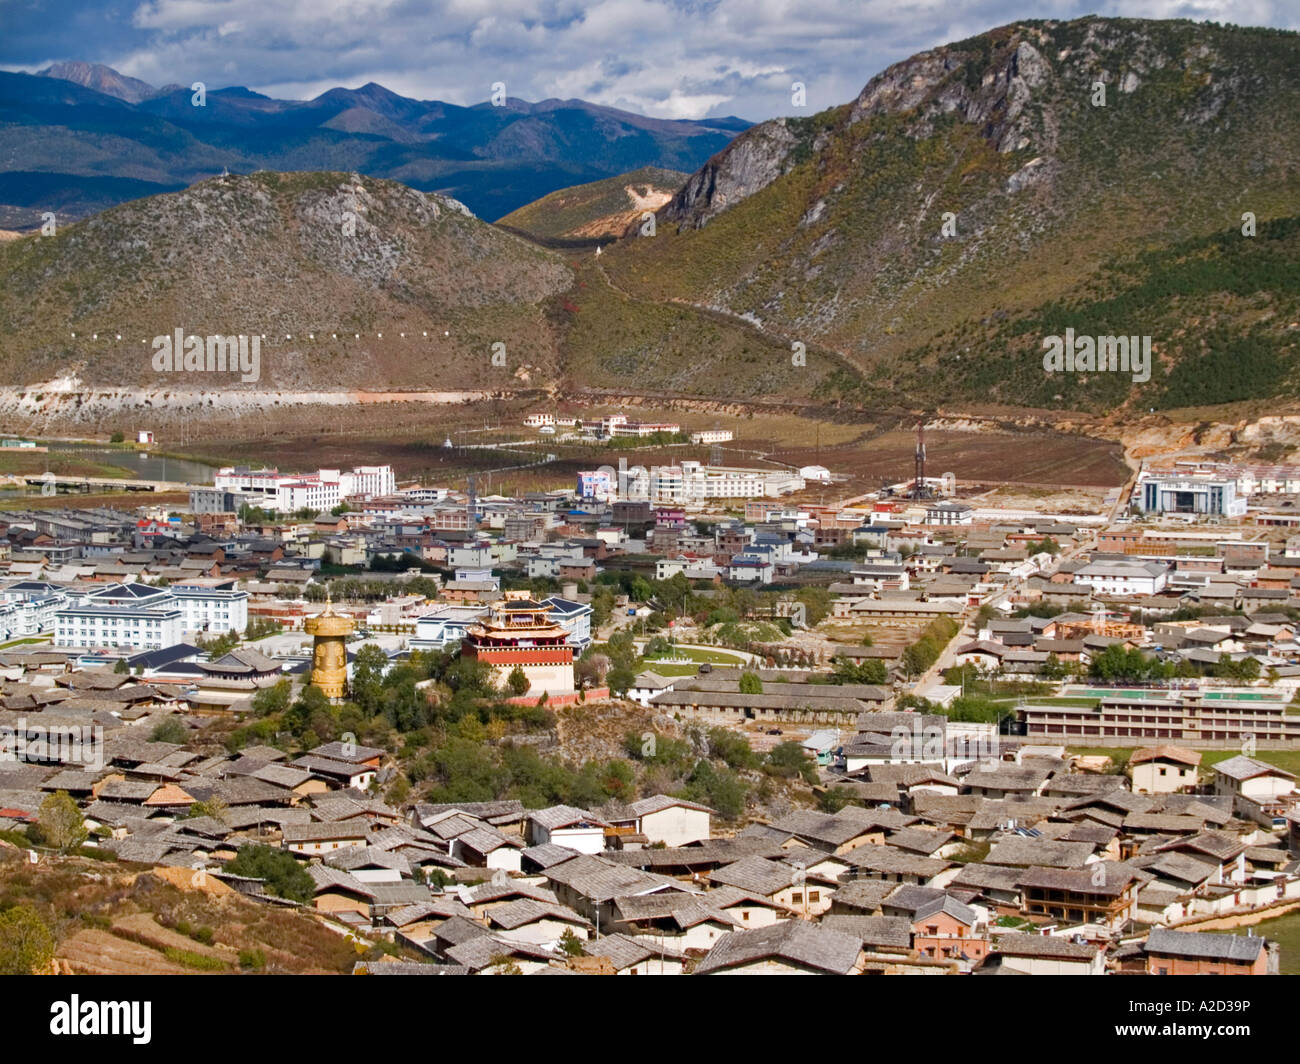 aerial view of old Tibetan town and monastery giant prayer wheel Shangri La China Stock Photo